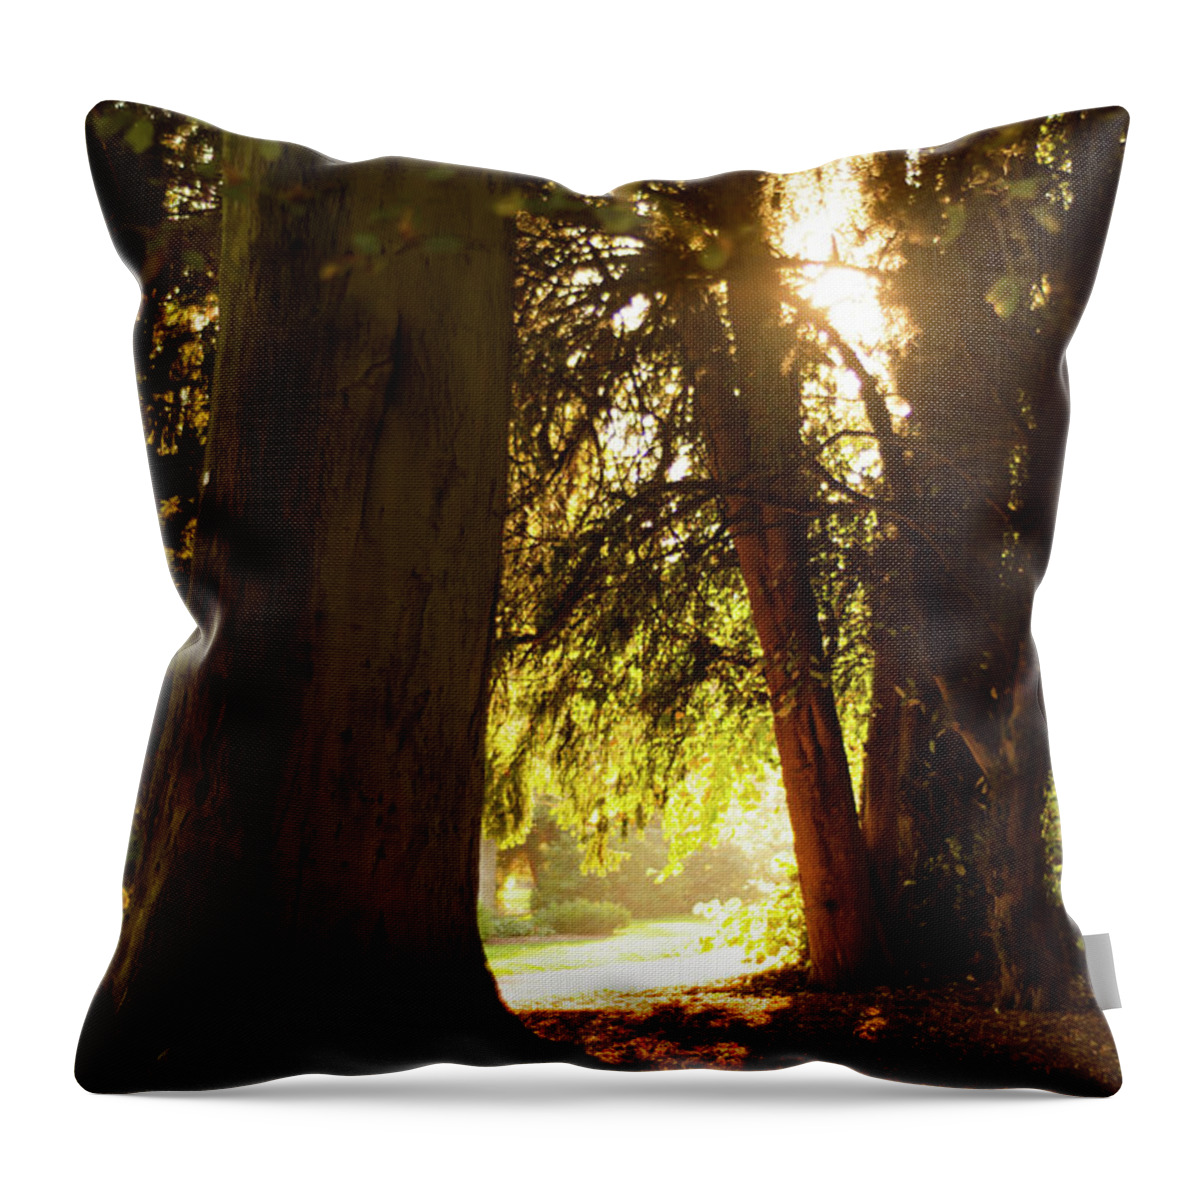 Autumn Throw Pillow featuring the photograph Light between trees by Scott Lyons